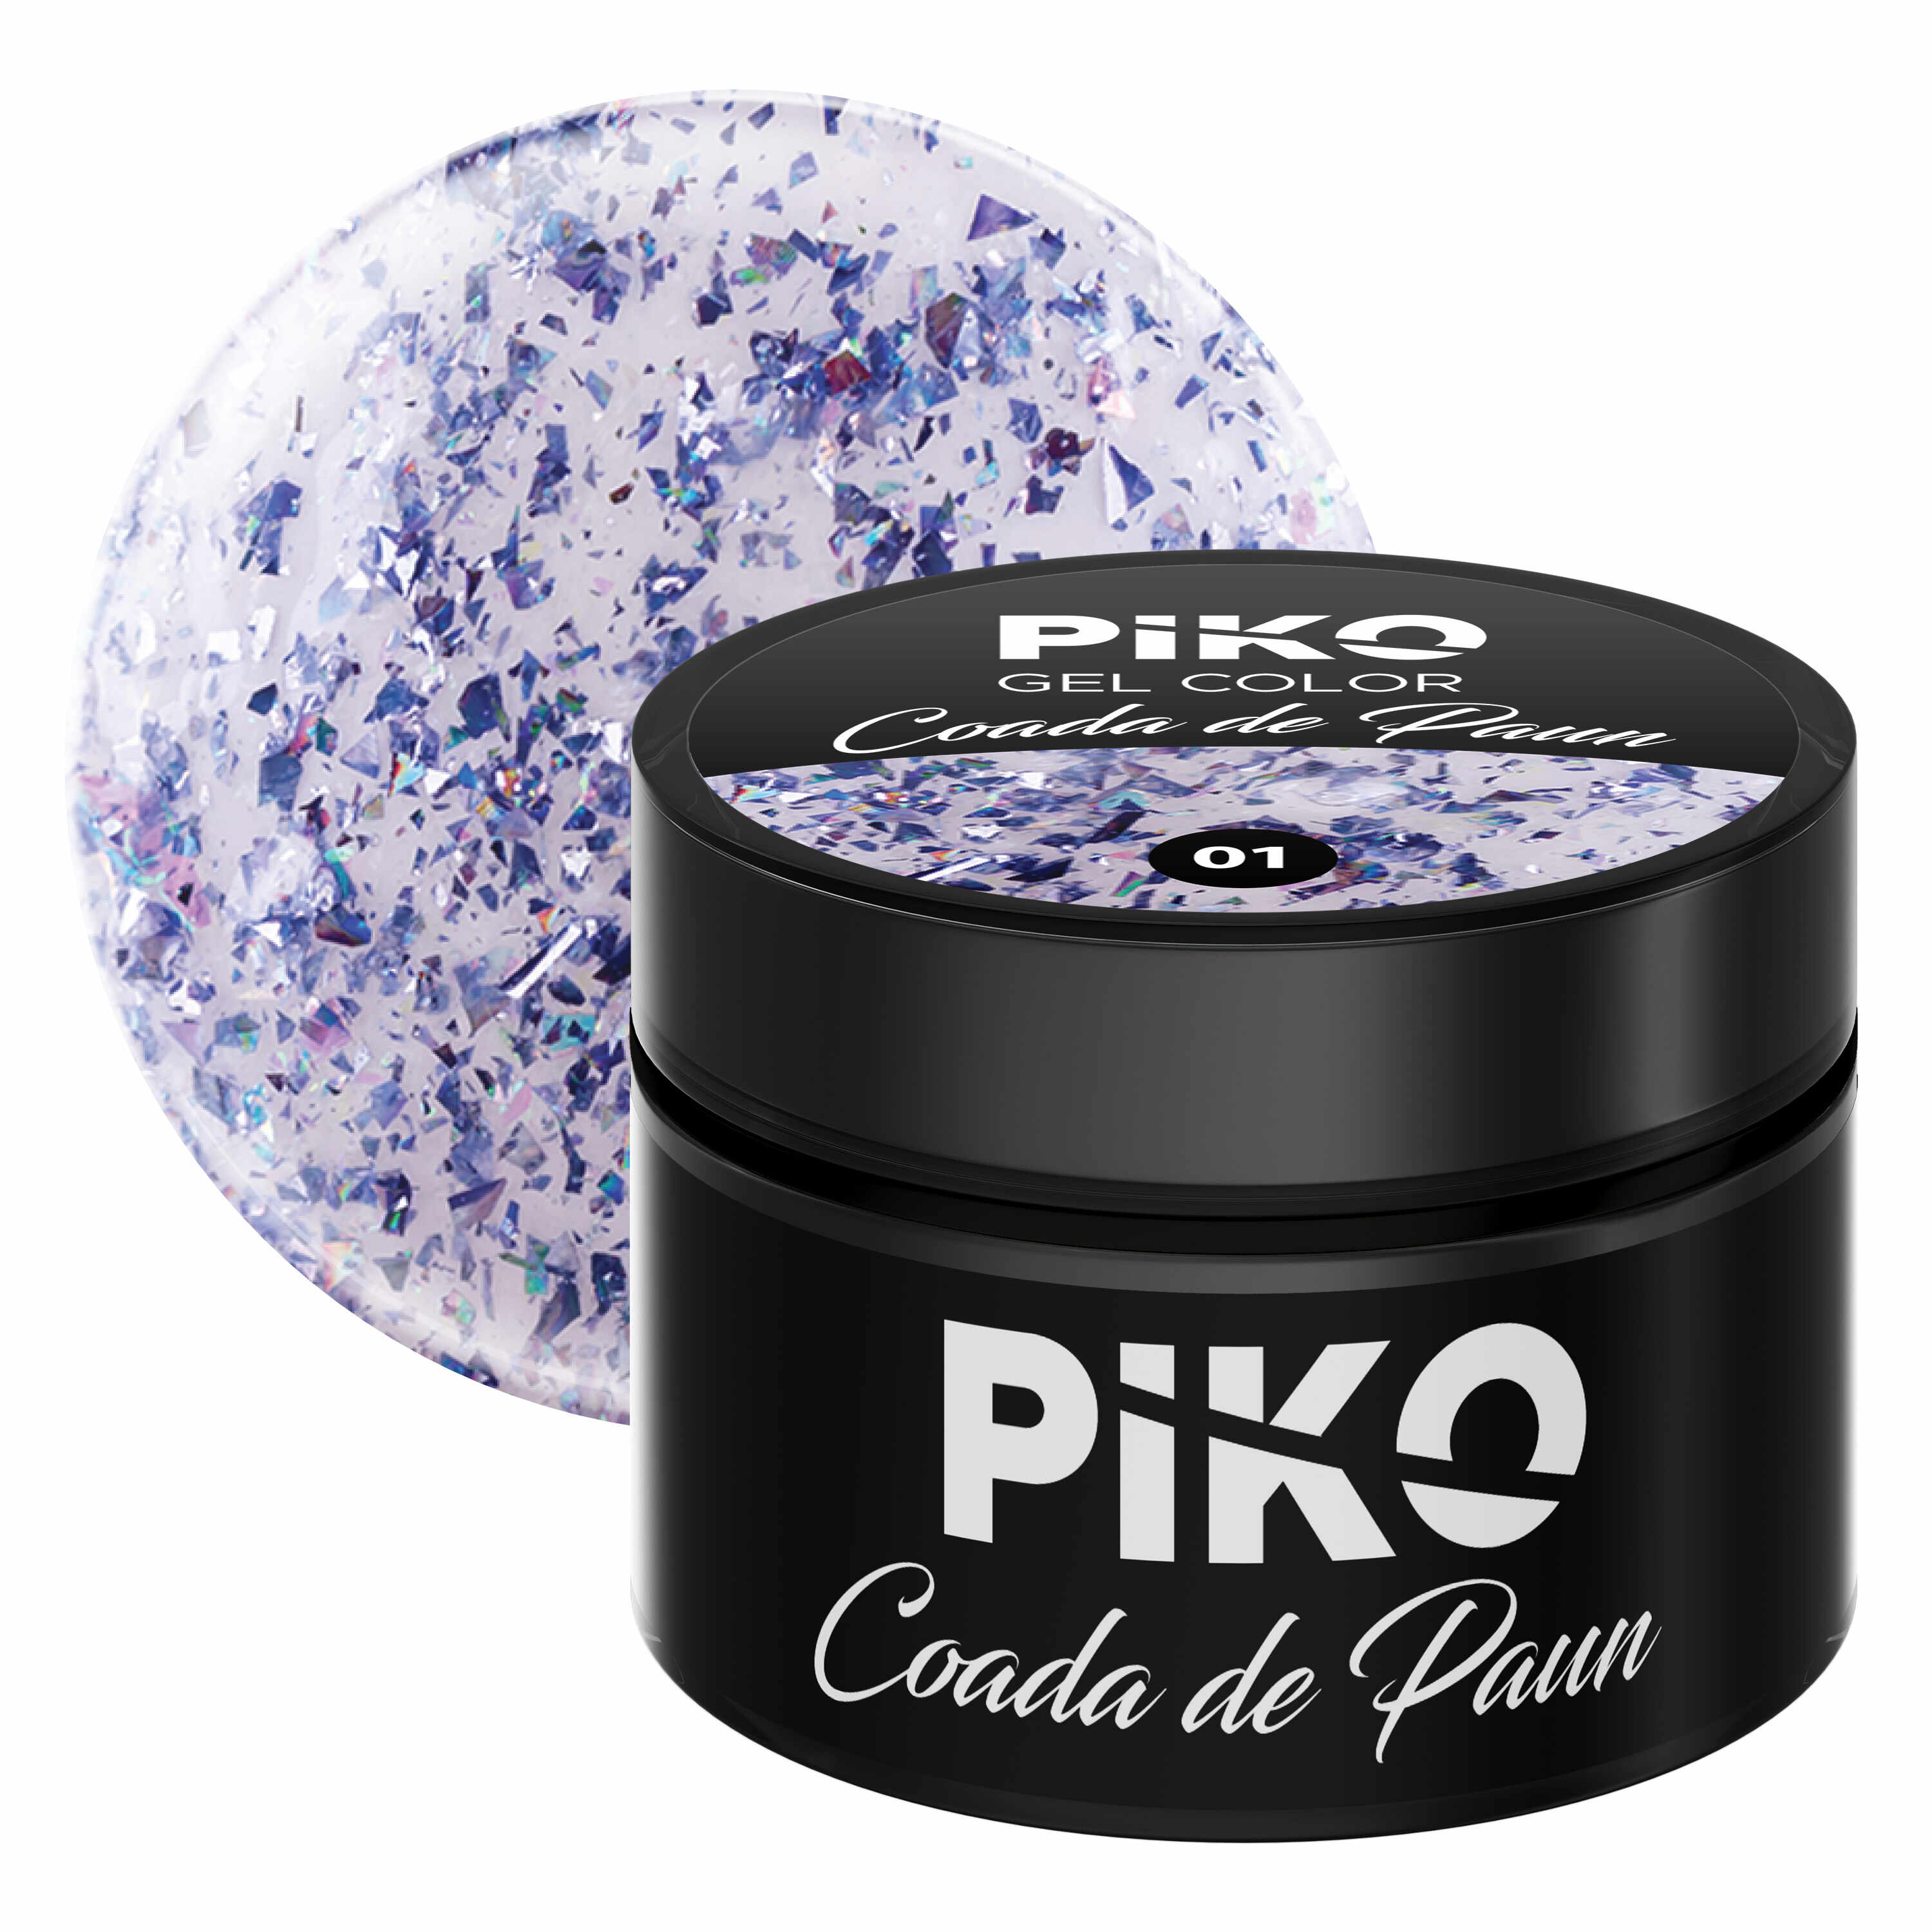 Gel UV color Piko, Coada de paun, 5g, model 01